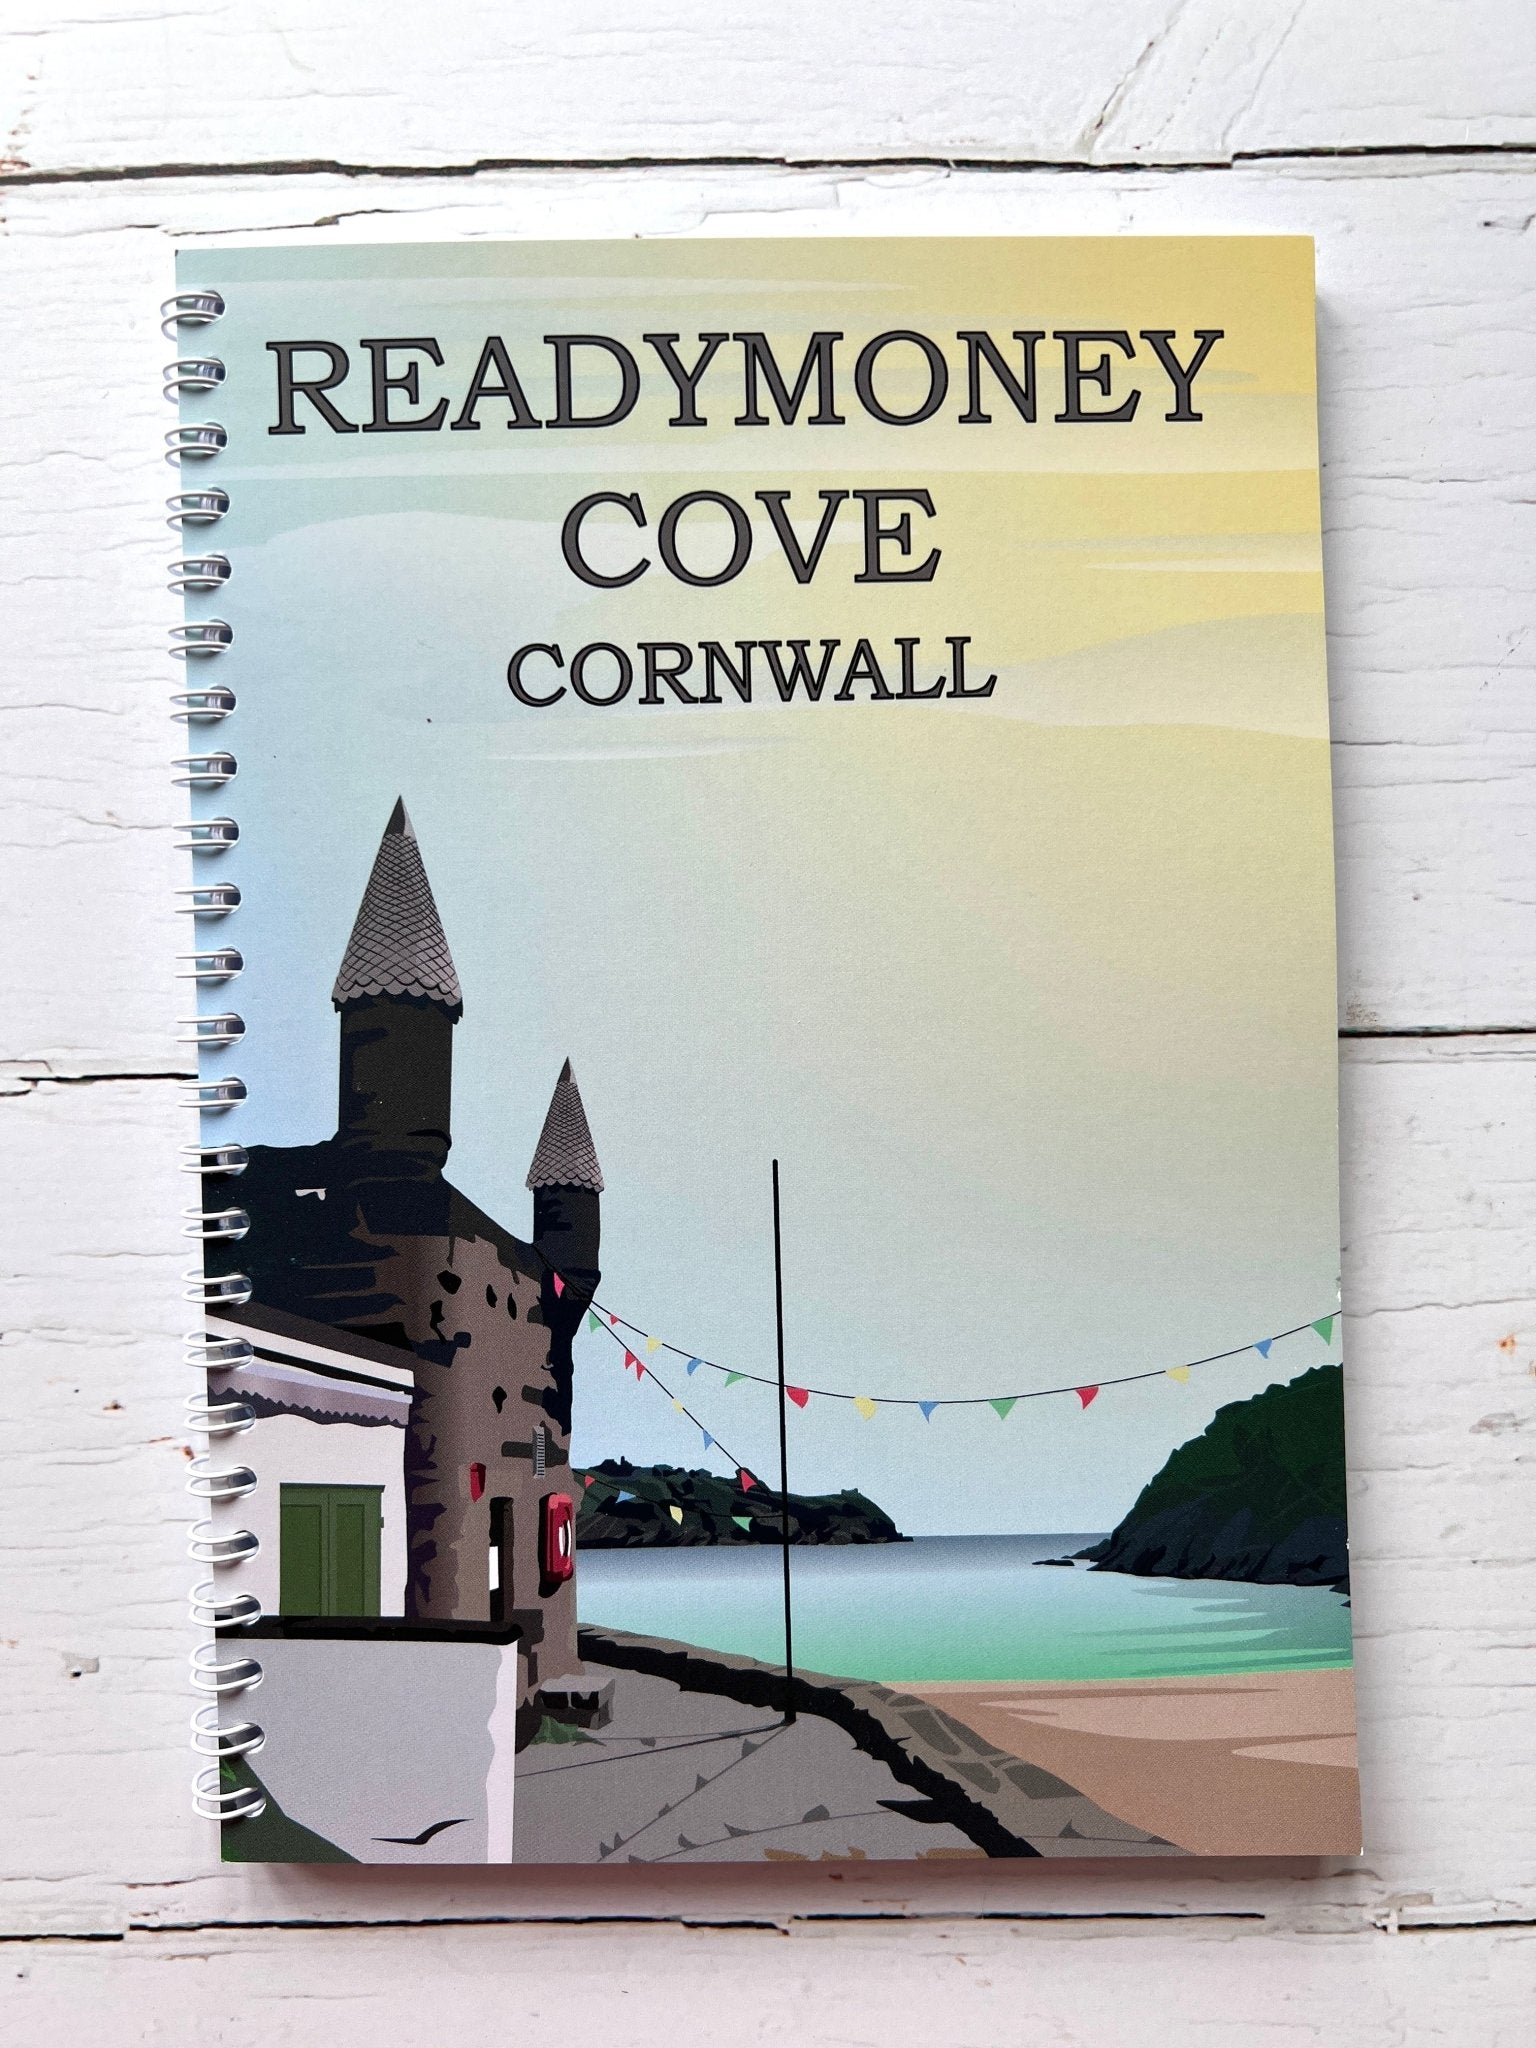 Readymoney Cove & Fowey Digital Art A5 Notebooks - Readymoney Beach Shop